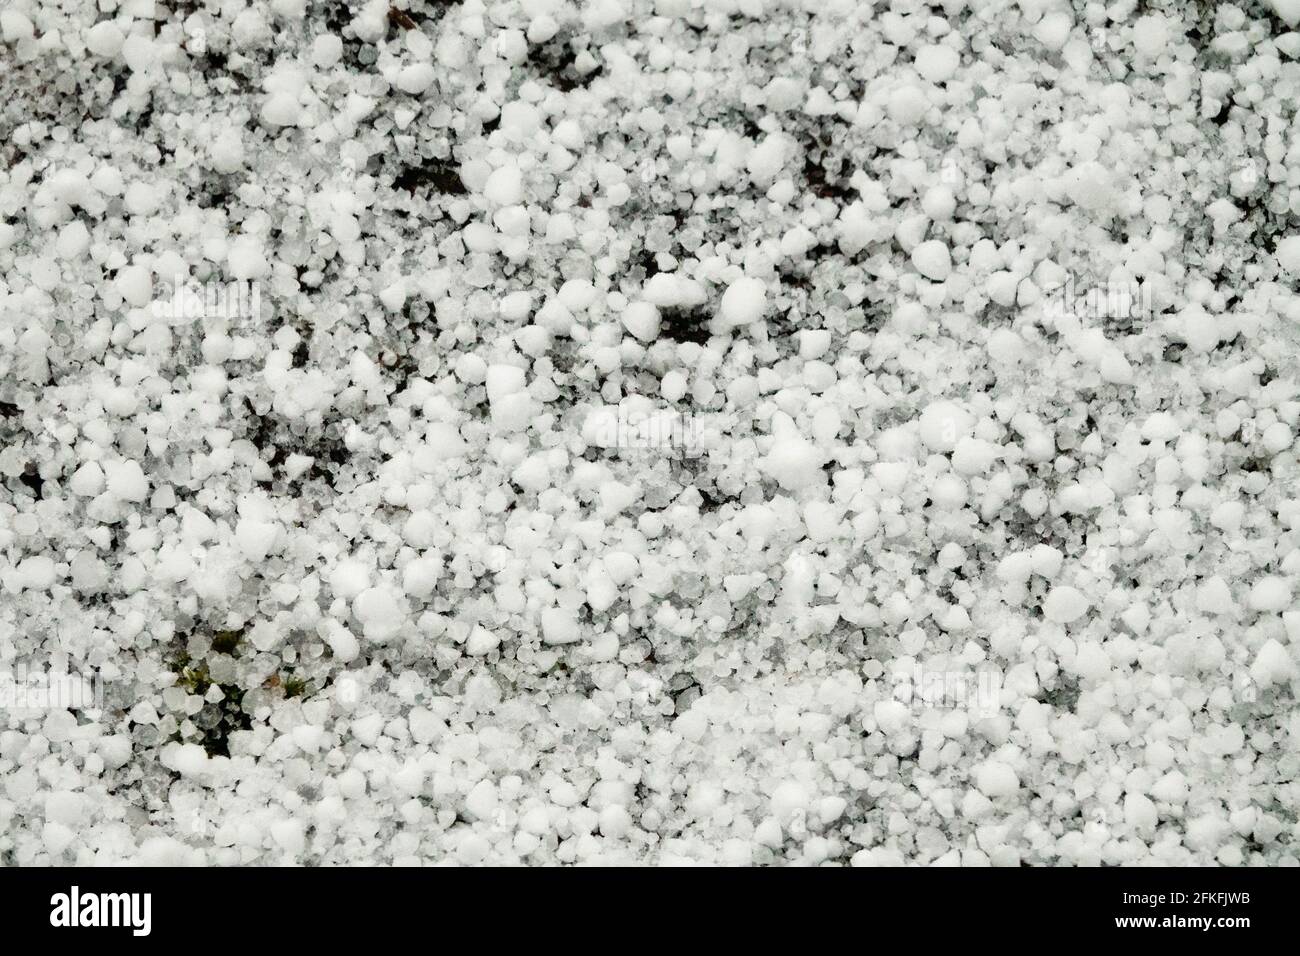 Meteorology. Tapioca snow (graupel, powder snow). Large round dense snowflakes intermediate in density between snow and hail. Spring snowfall Stock Photo